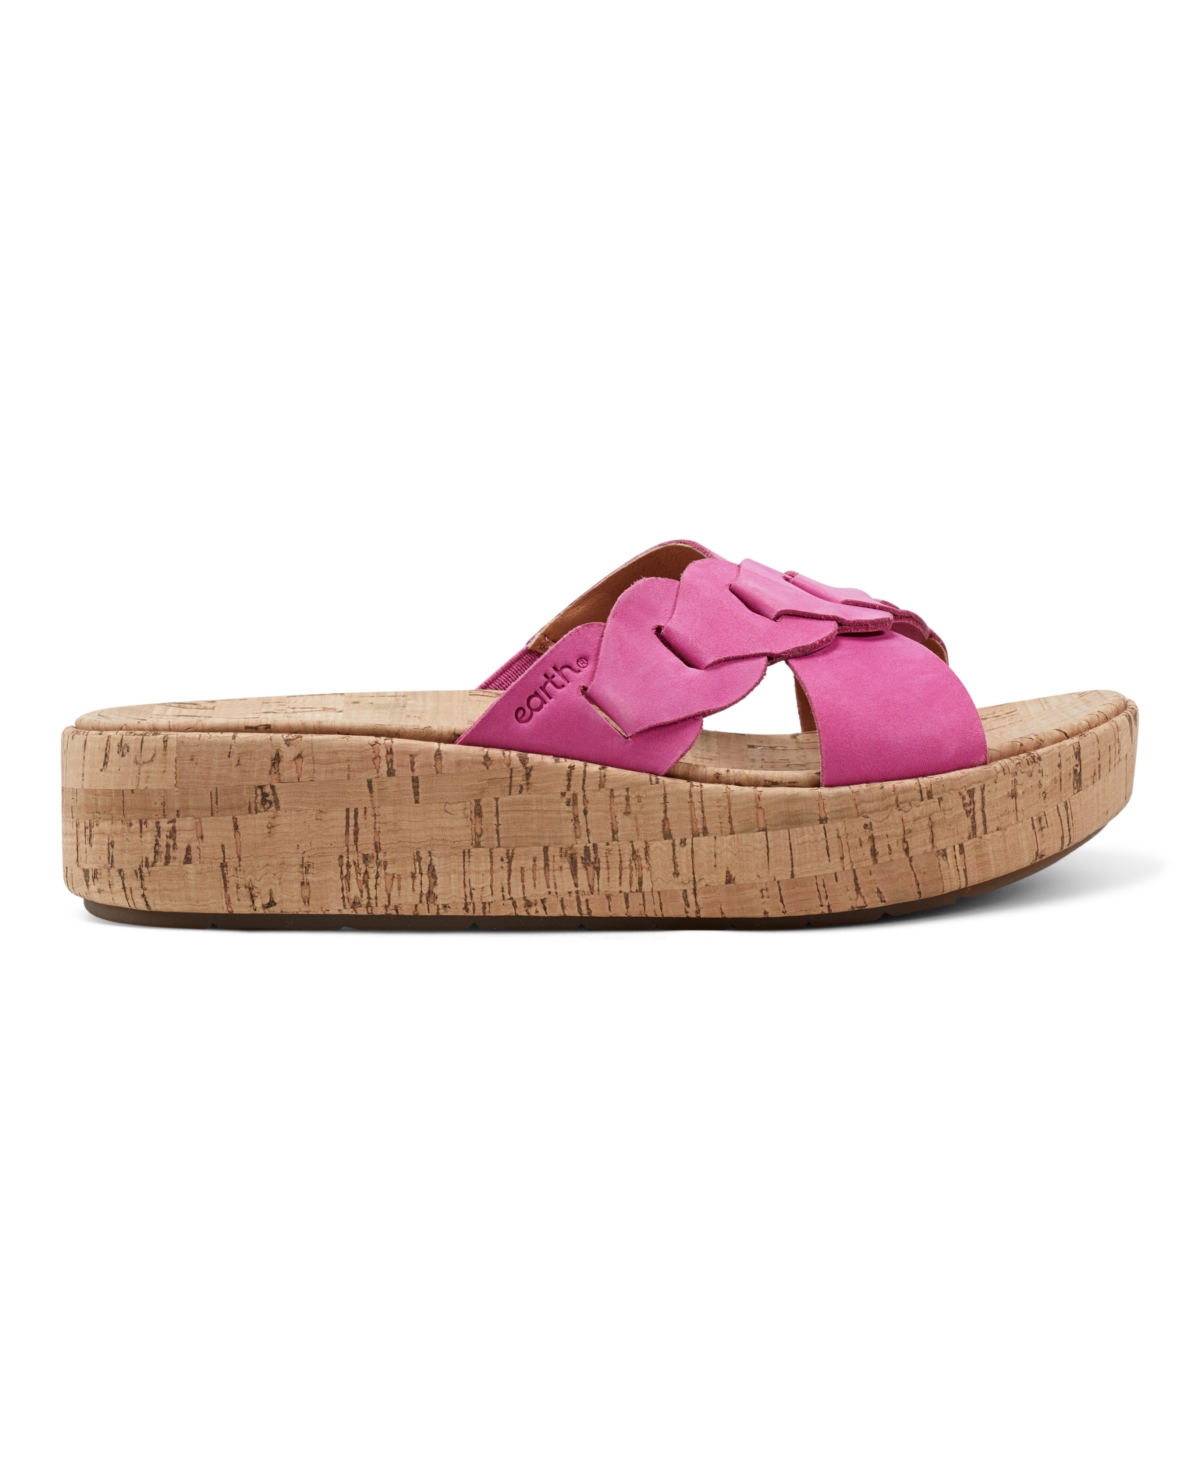 Earth Women's Scotti Criss Cross Slip On Platform Wedge Sandals - Dark Pink Nubuck